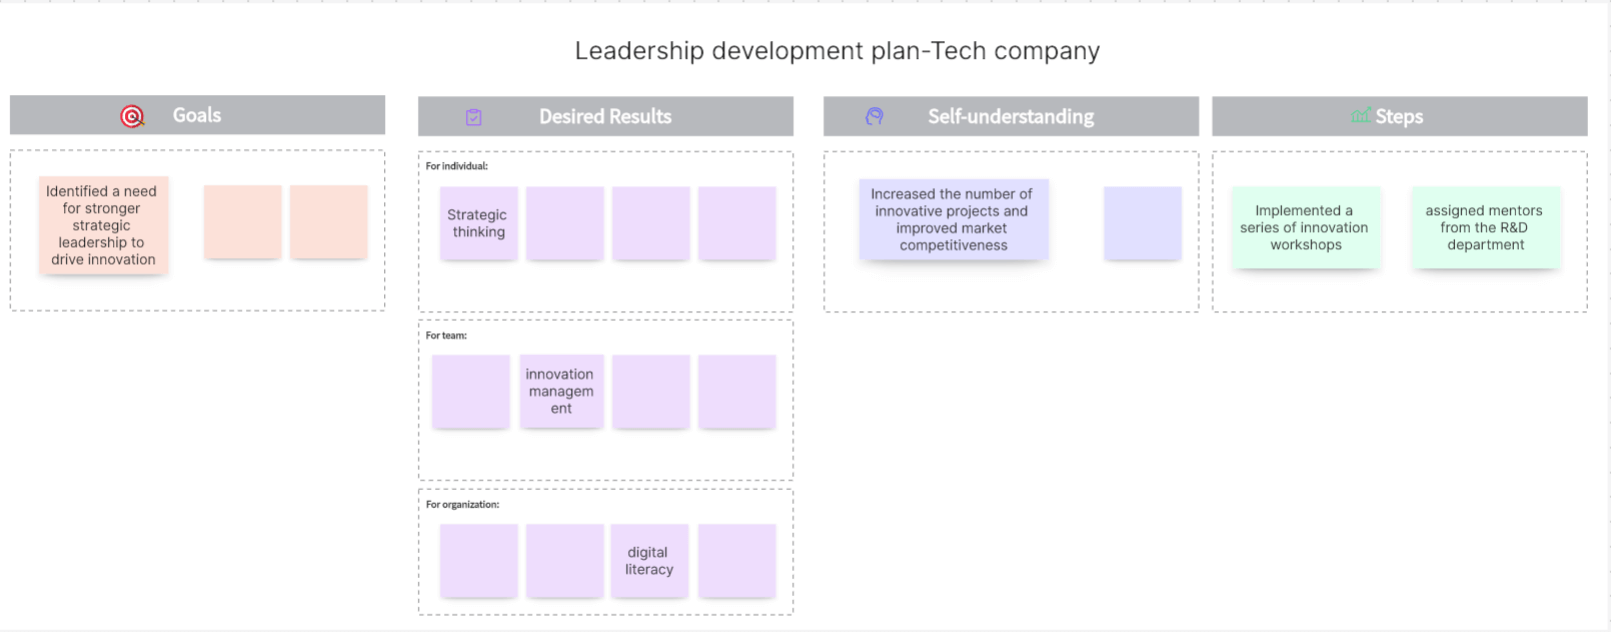 Leadership-development-plan-Tech-company